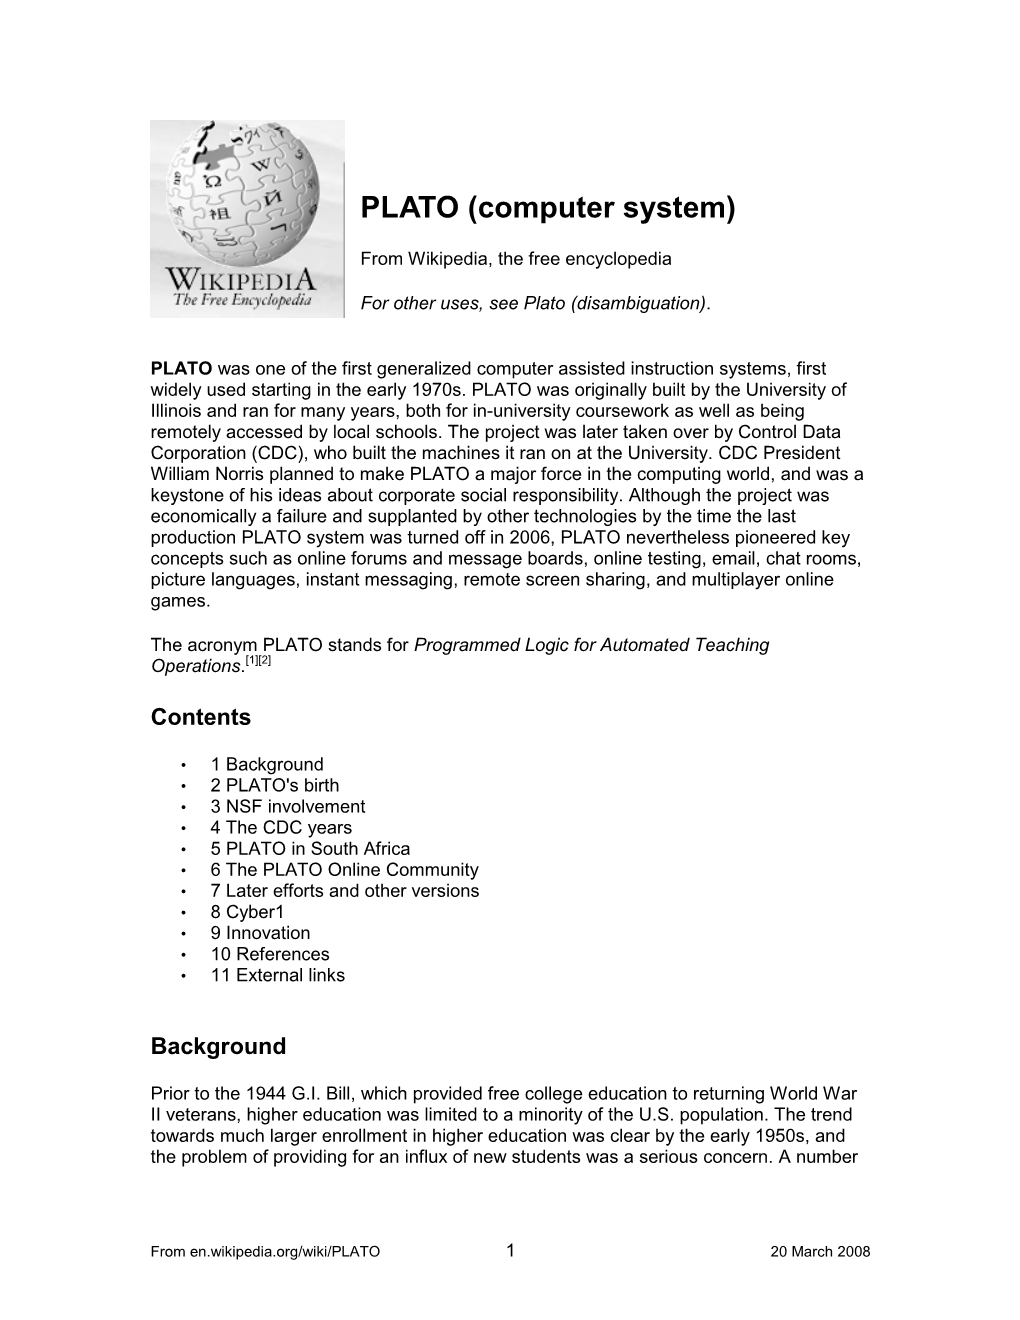 PLATO (Computer System)